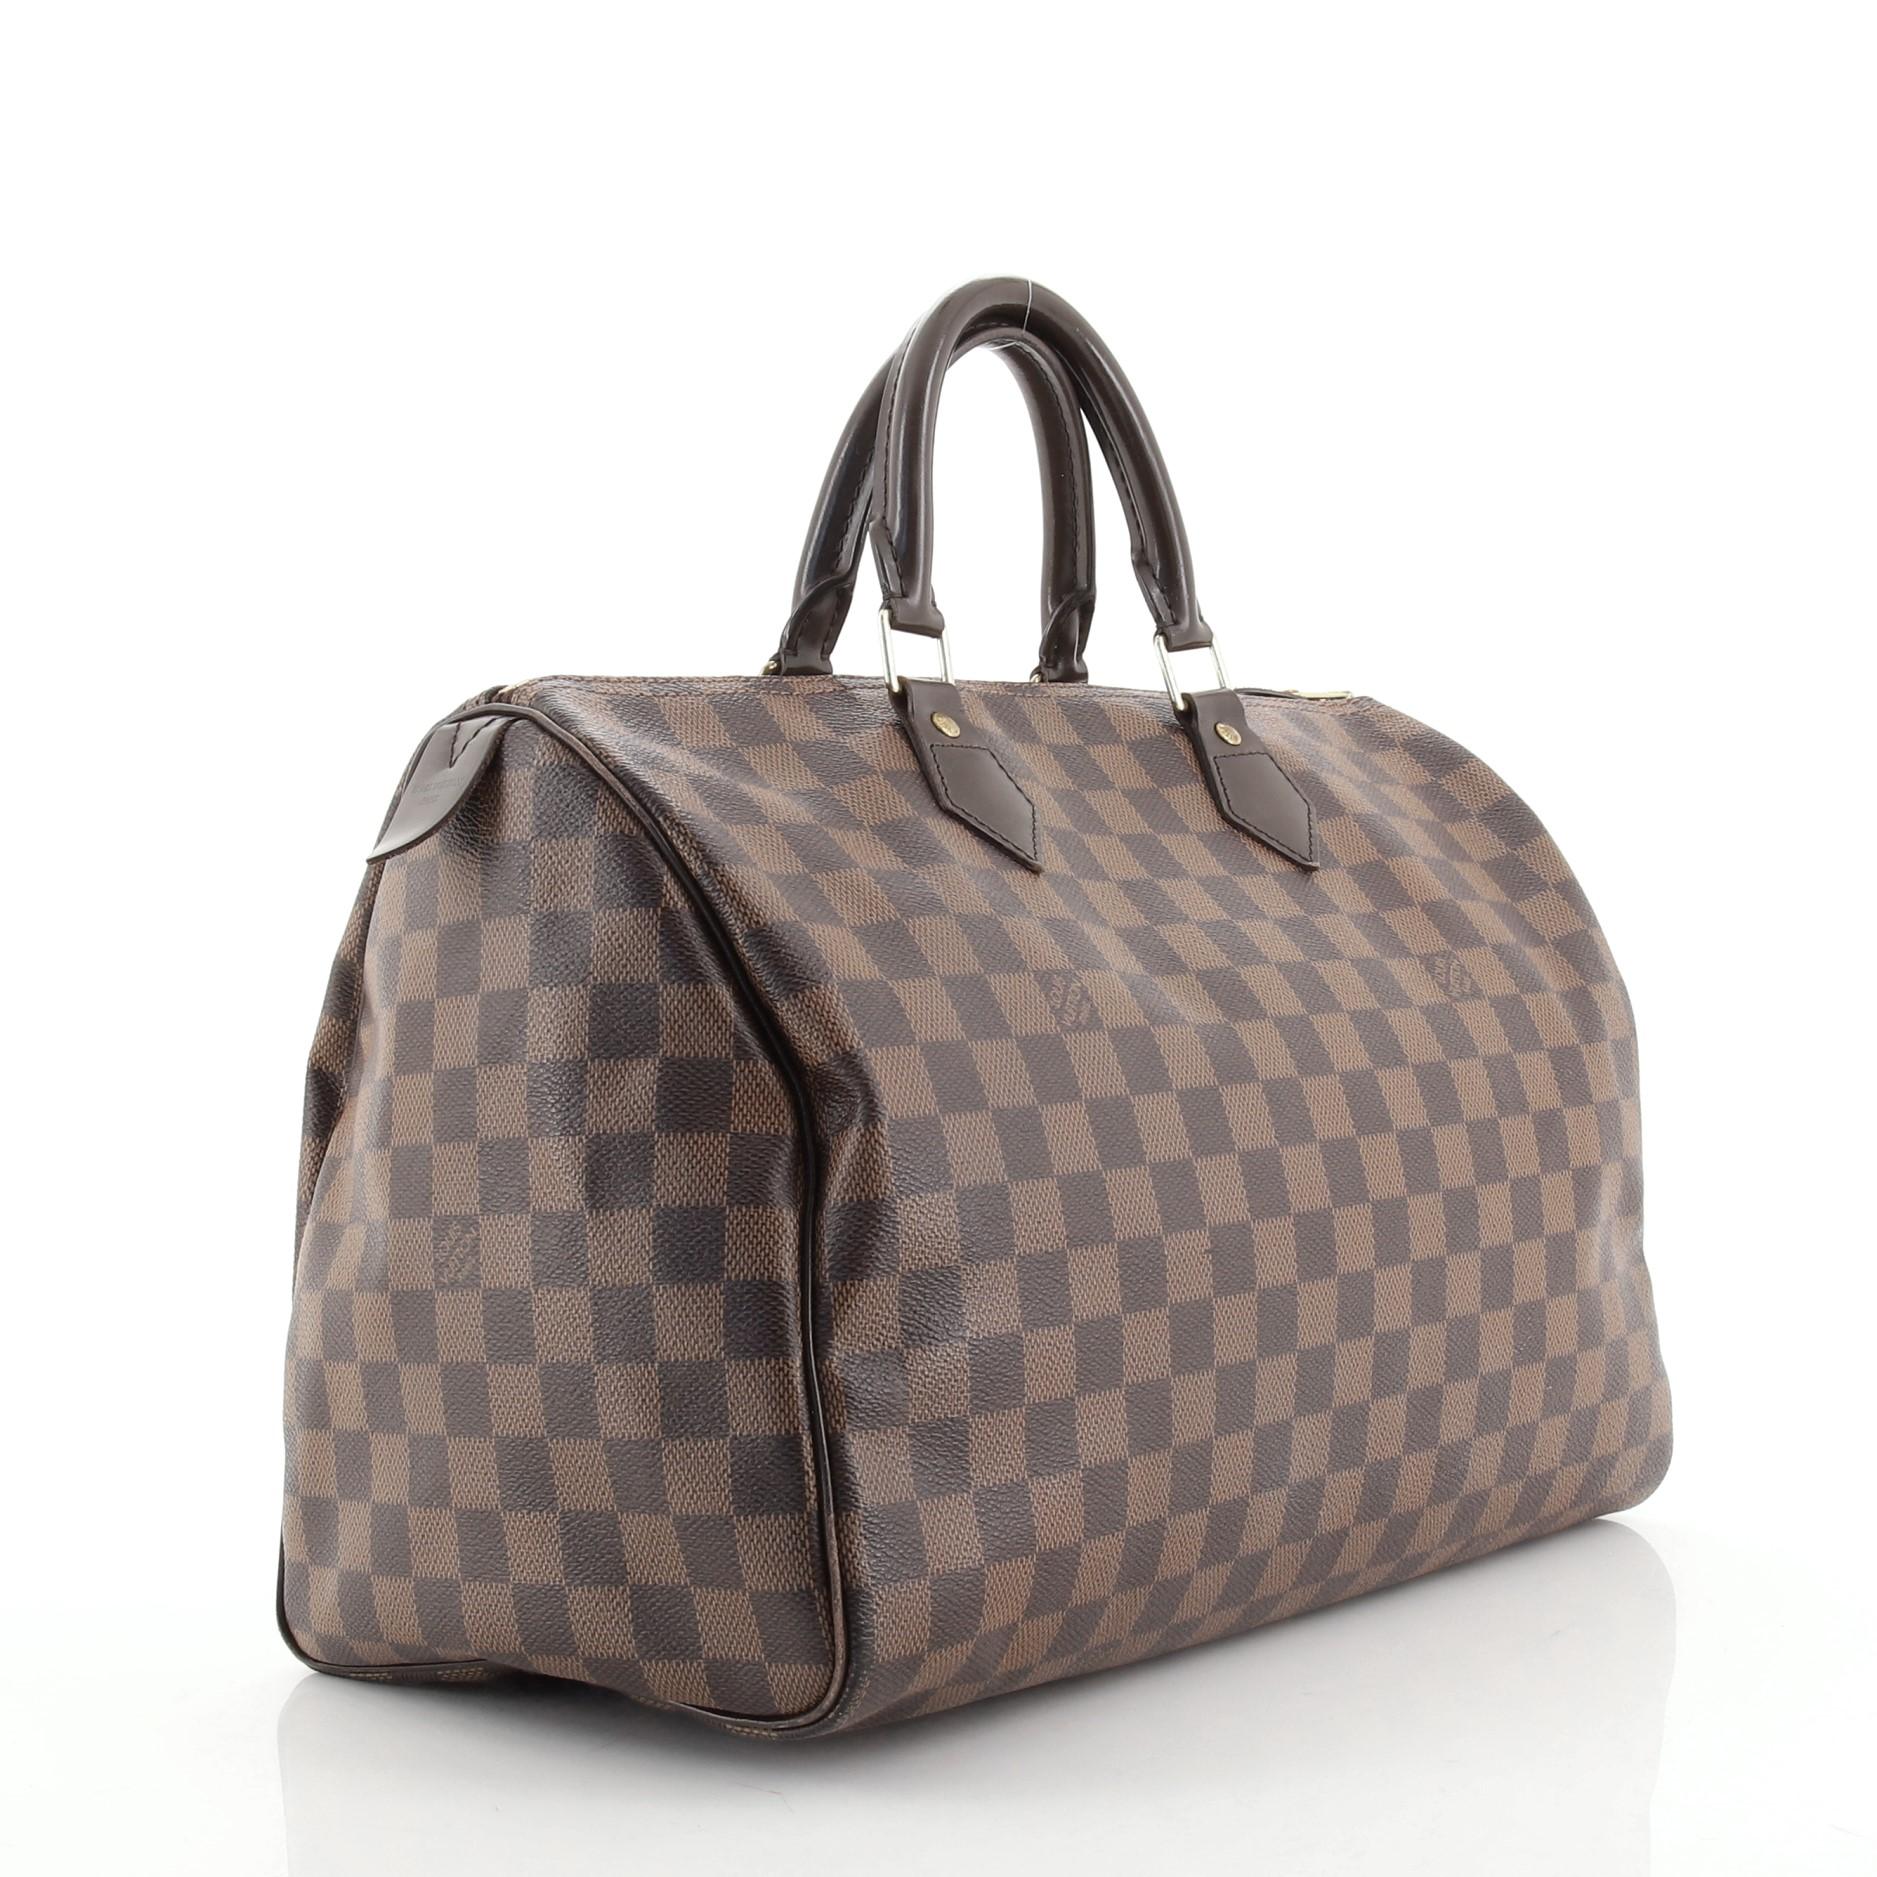 Gray Louis Vuitton Speedy Handbag Damier 35